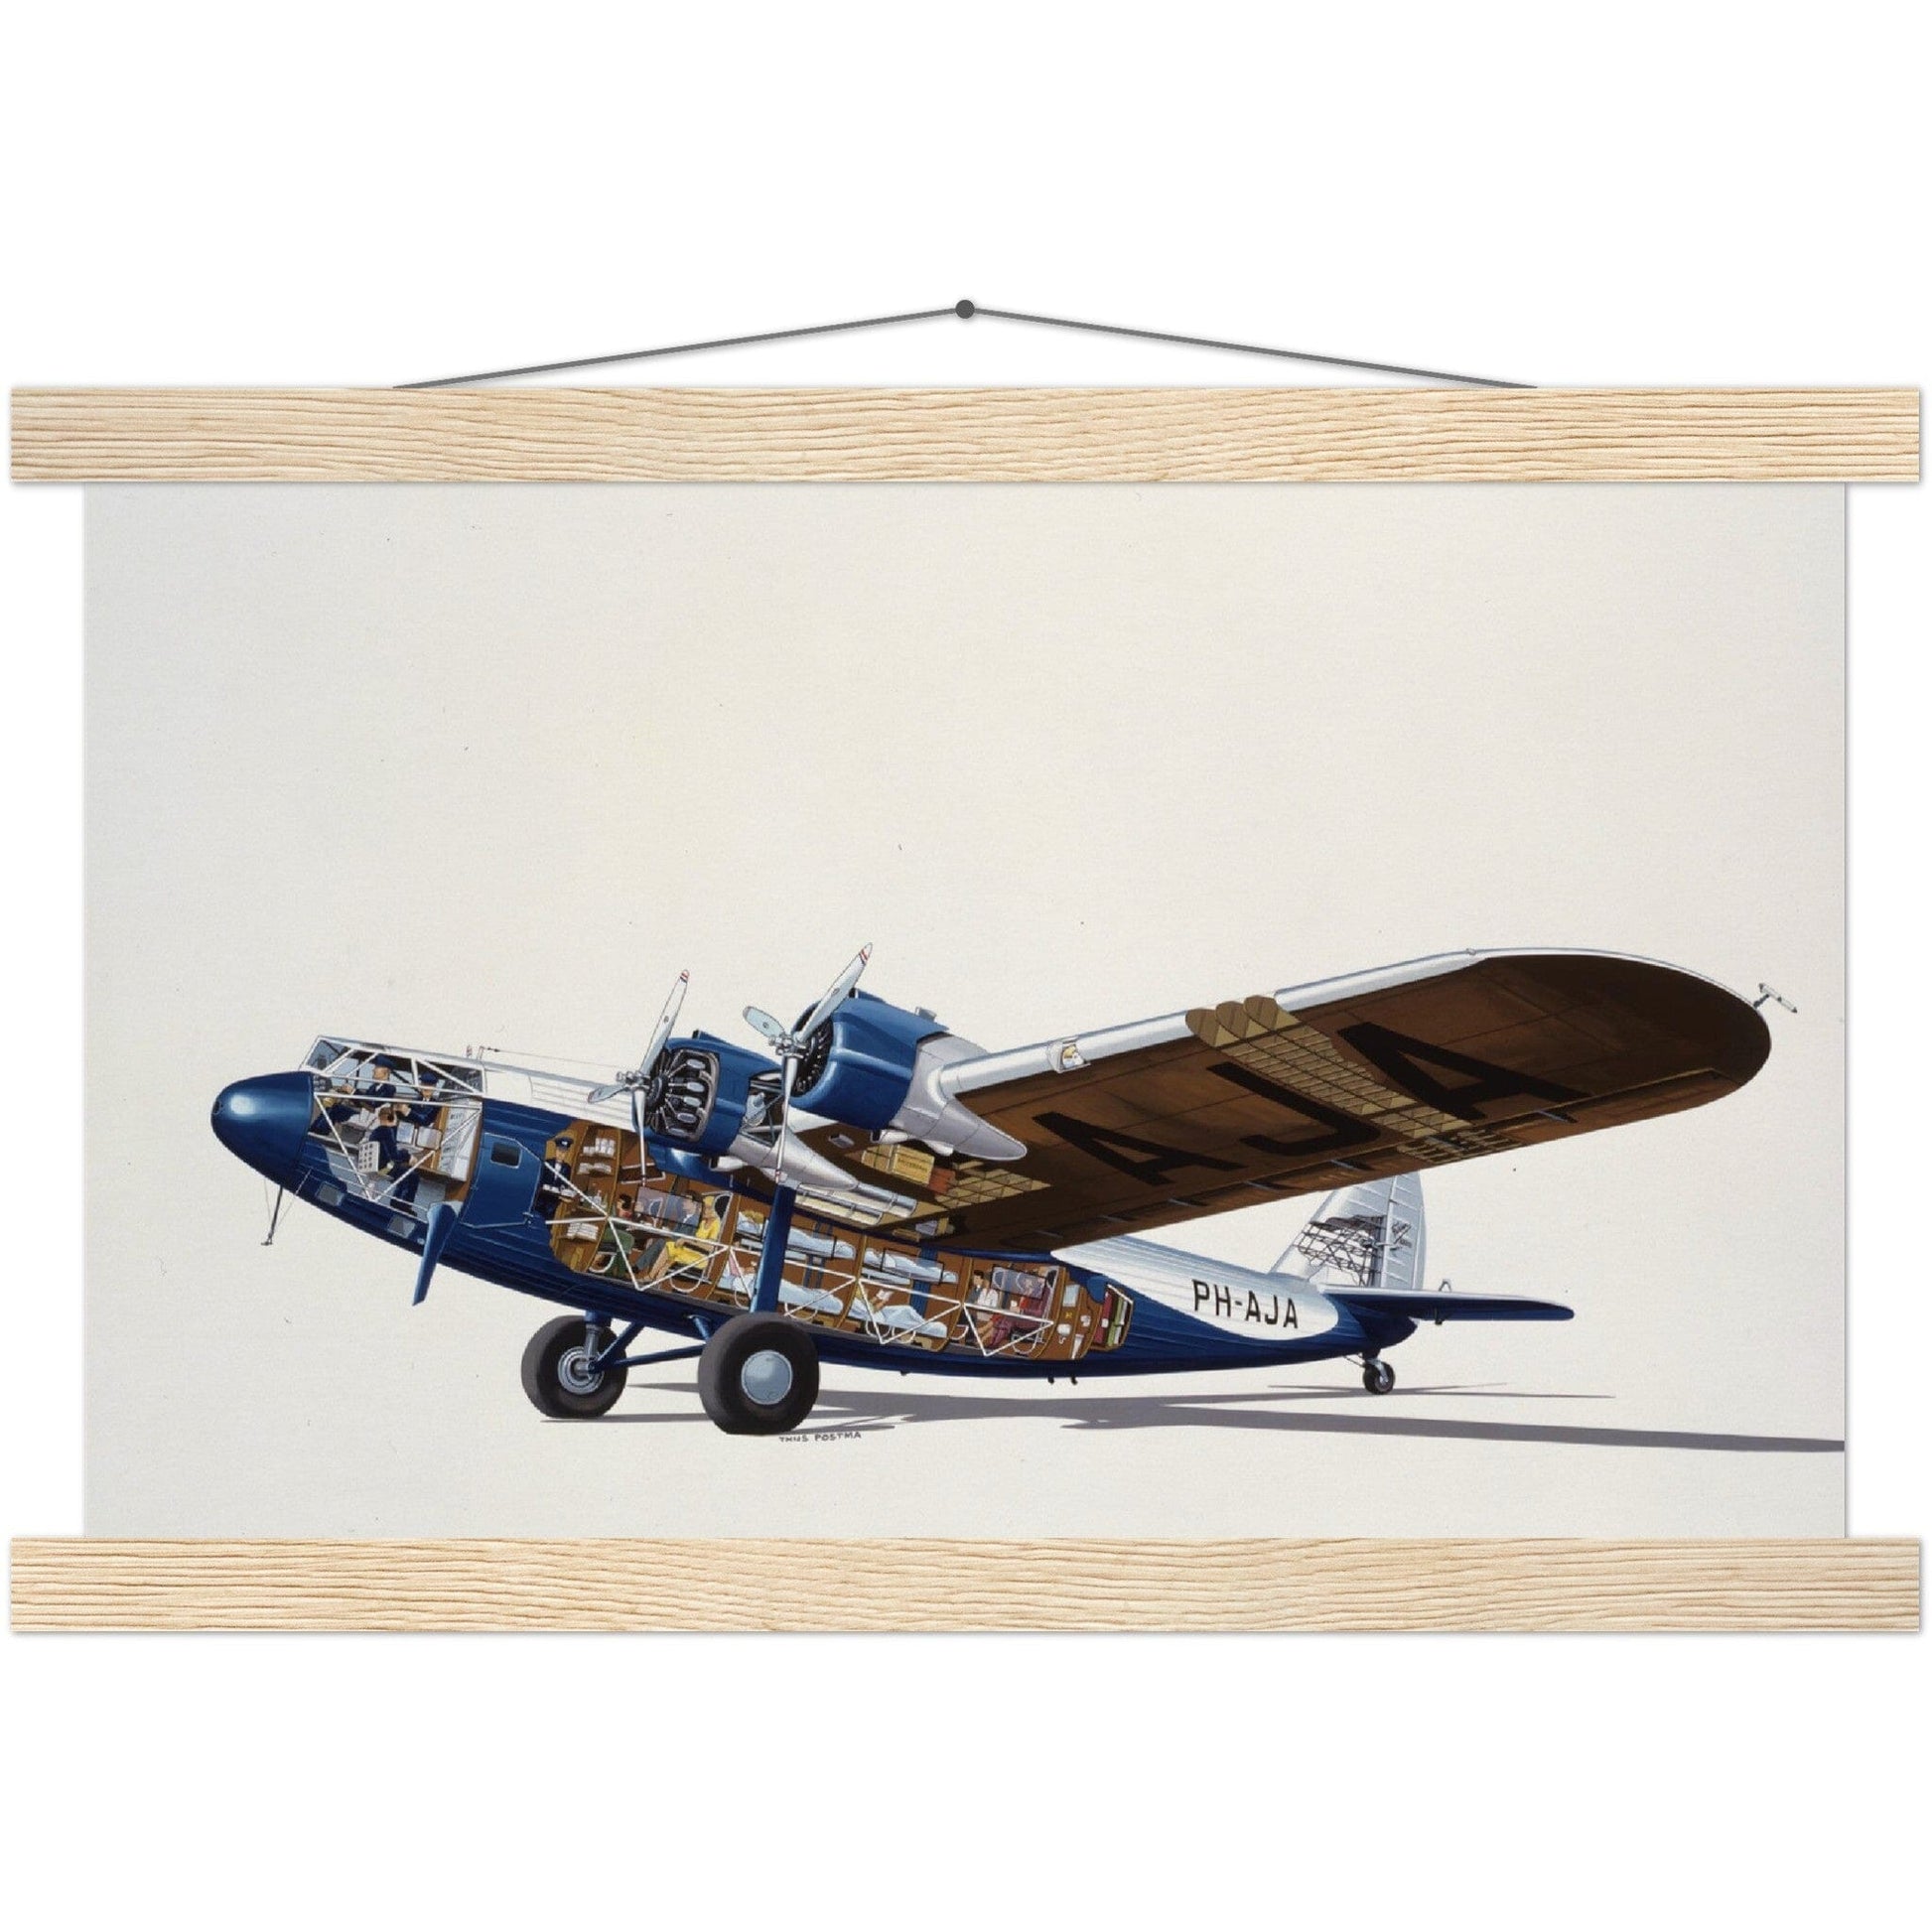 Thijs Postma - Poster - Fokker F.XXXVI Cutaway - Hanger Poster - Hanger TP Aviation Art 28x43 cm / XL (11x17″) natural wood 